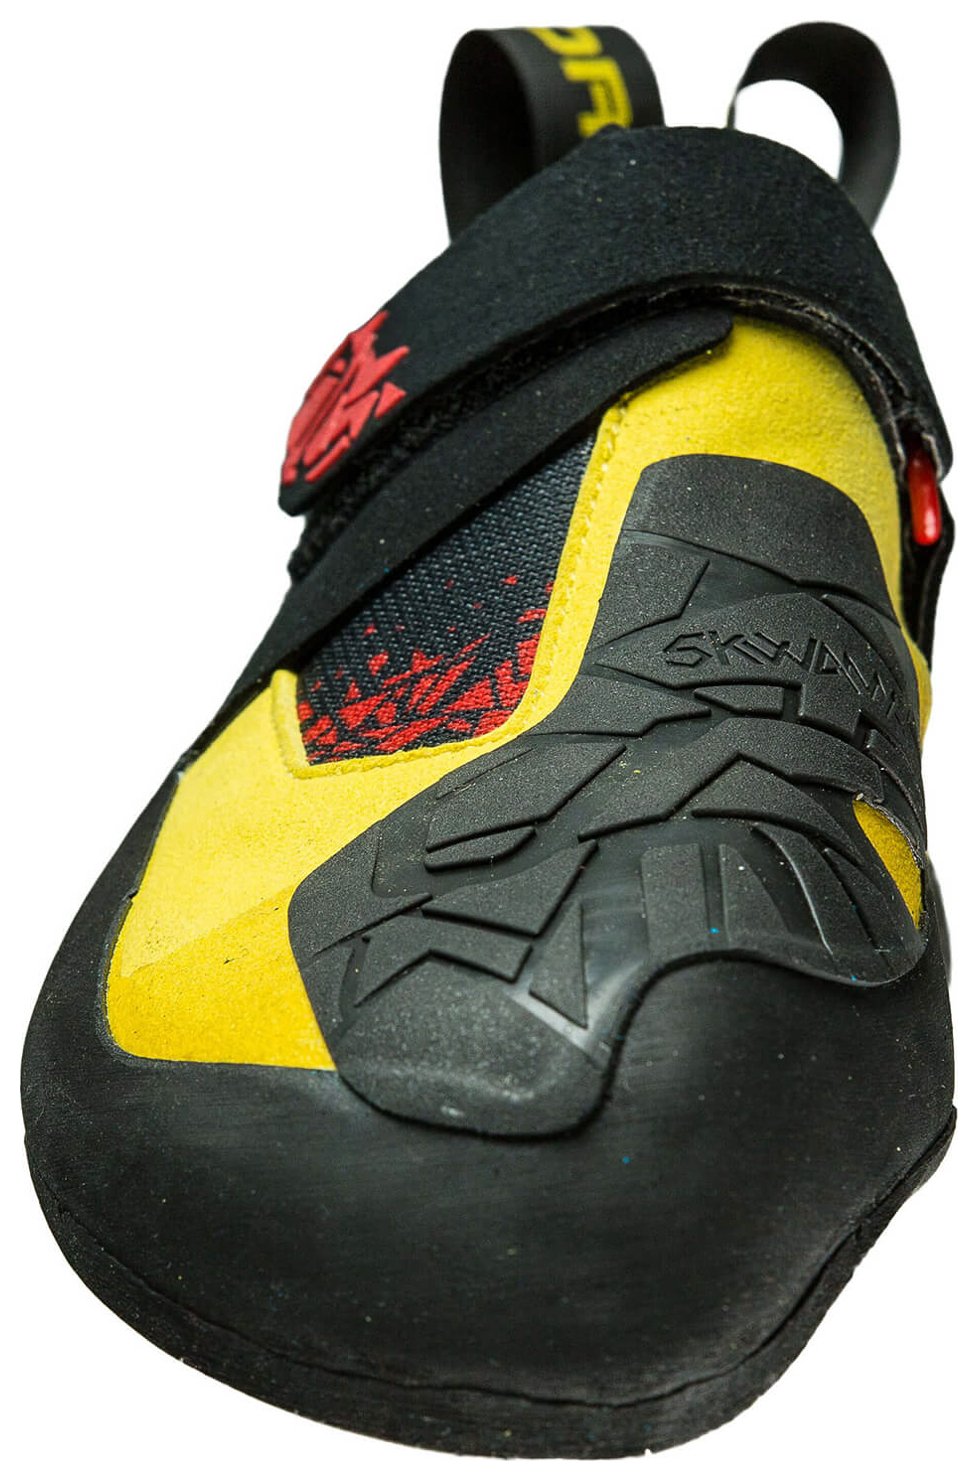 Skwama men's - black/yellow, climbing shoes